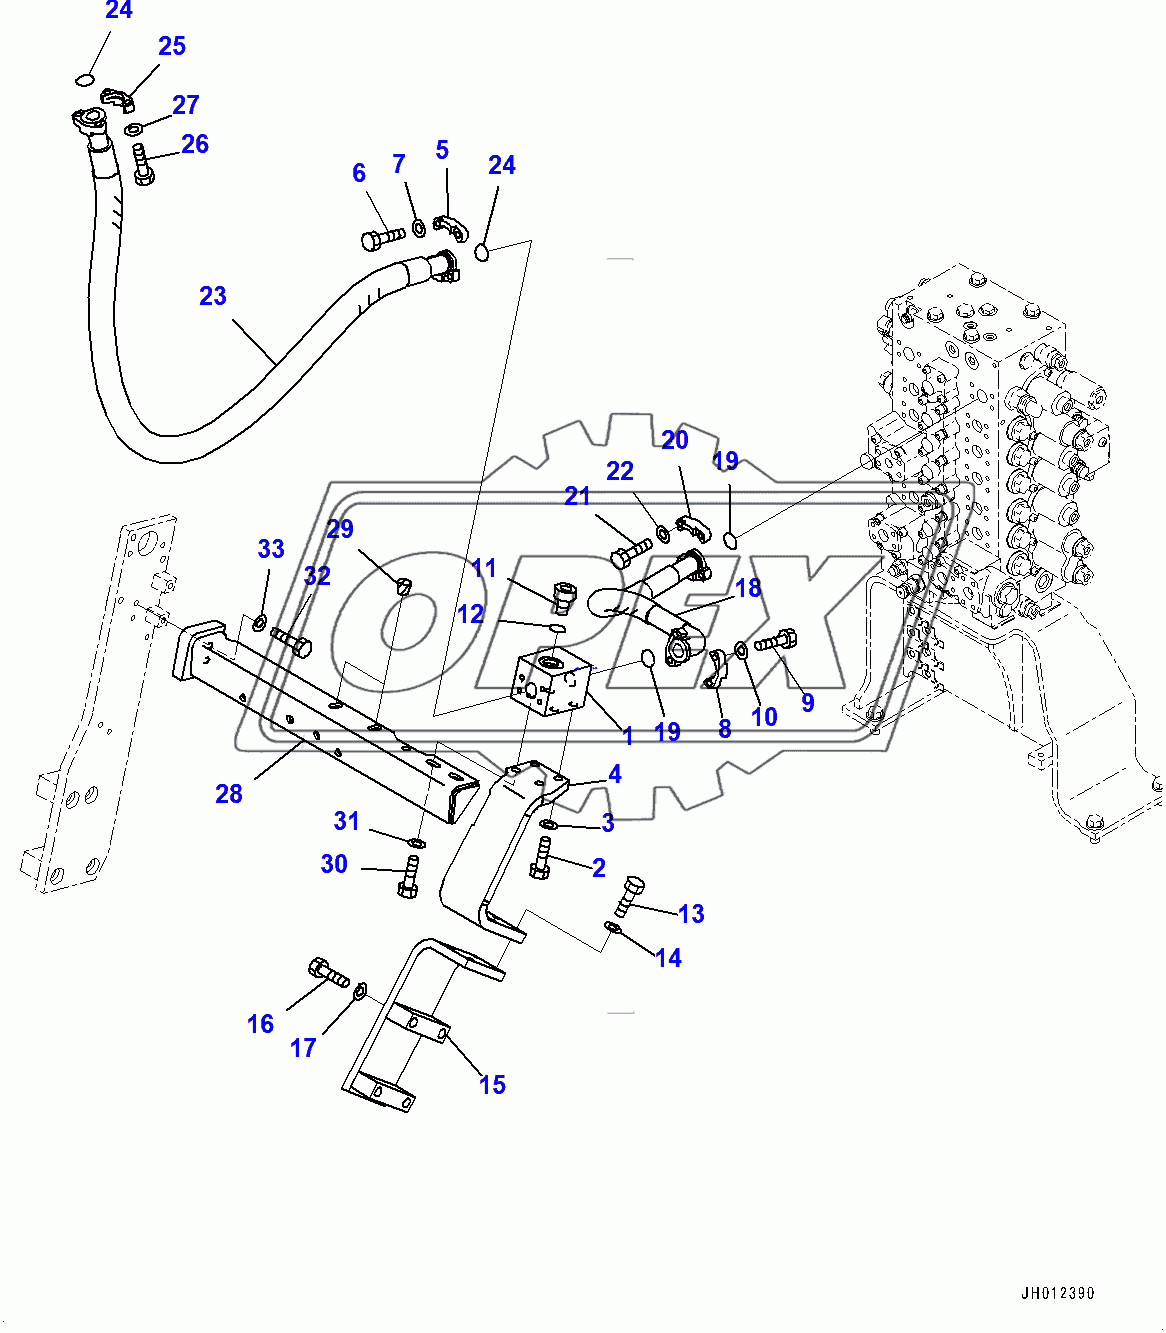  Actuator Piping, Main Piping, L.H. (400001-) 1